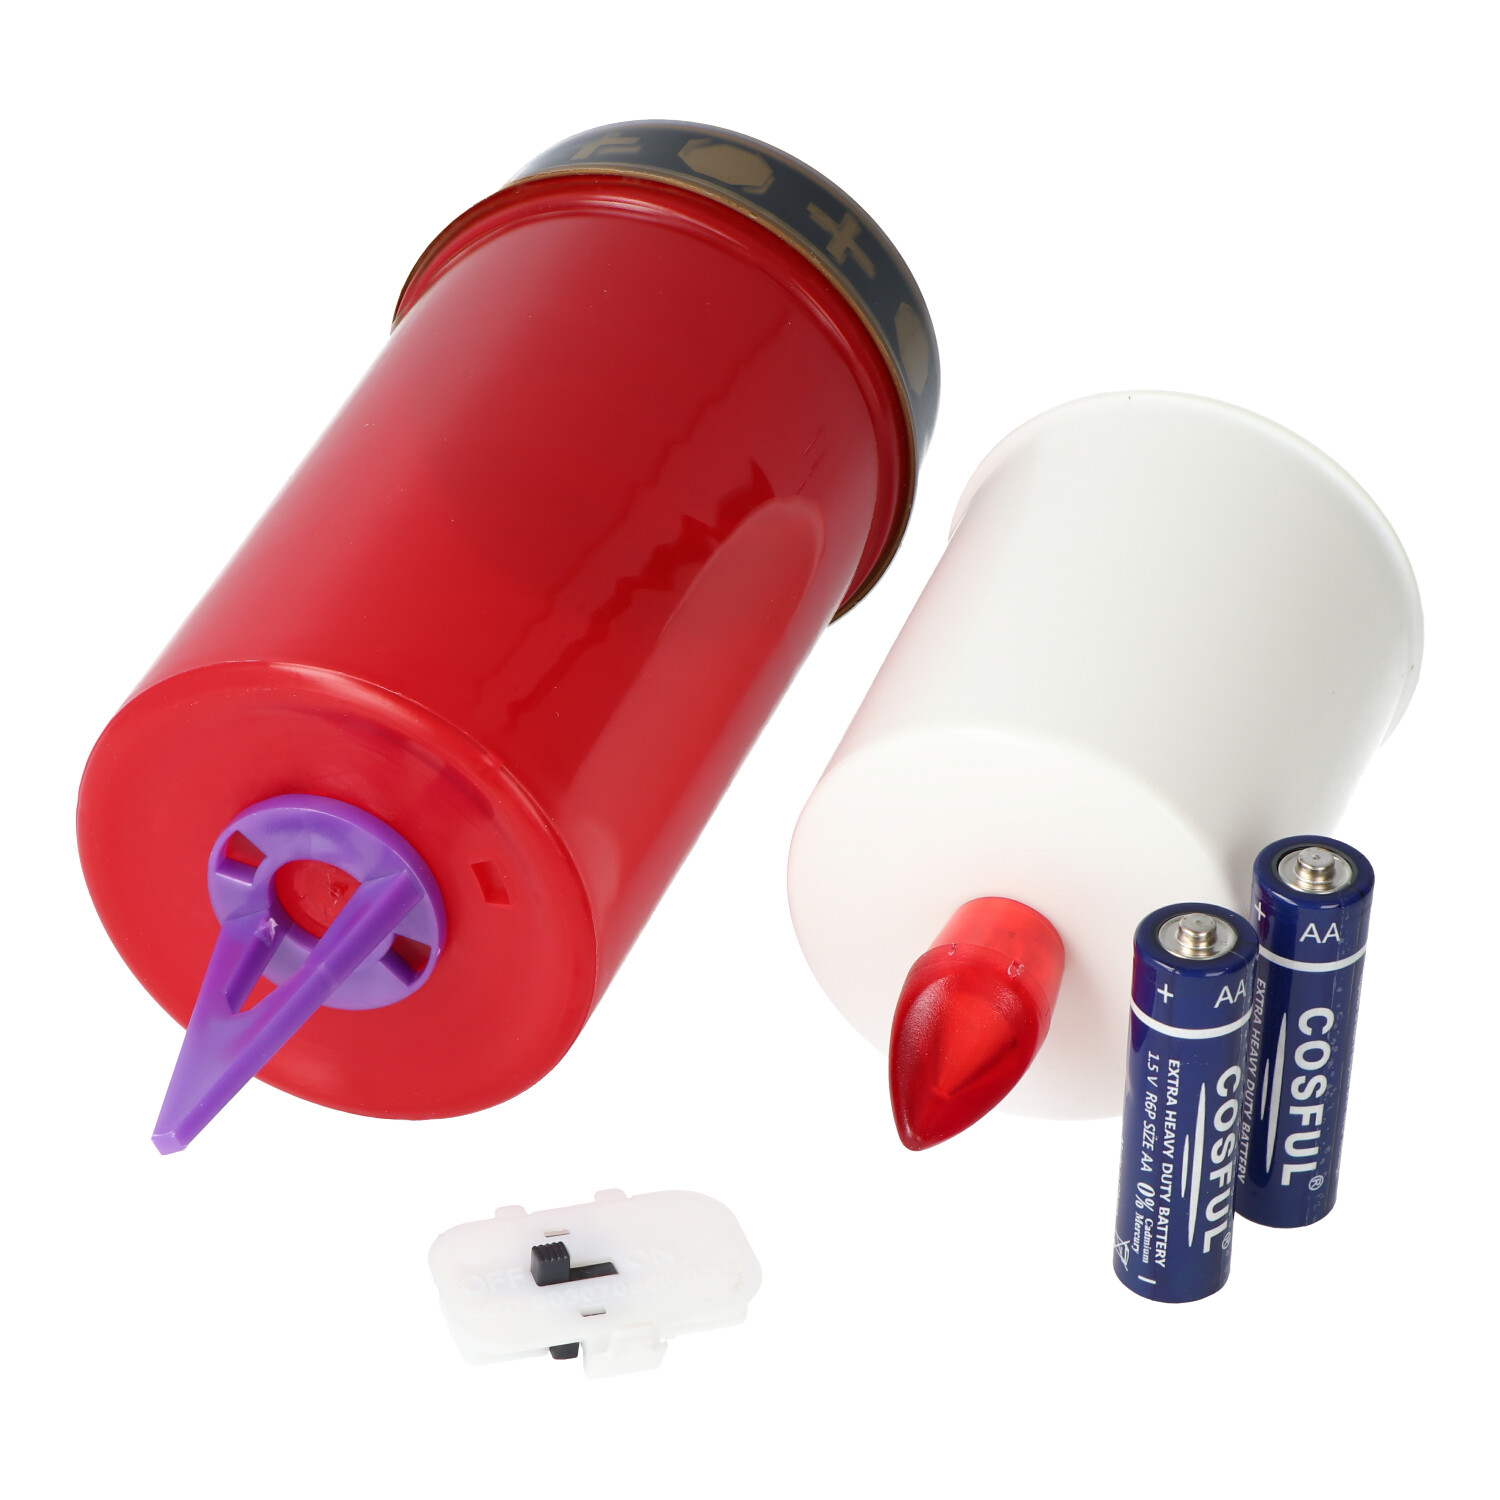 LED-Grablicht rot mit Kerzenschein, 13,2x7,3cm, inklusive 2x AA Mignon LR6 Standard Batterien